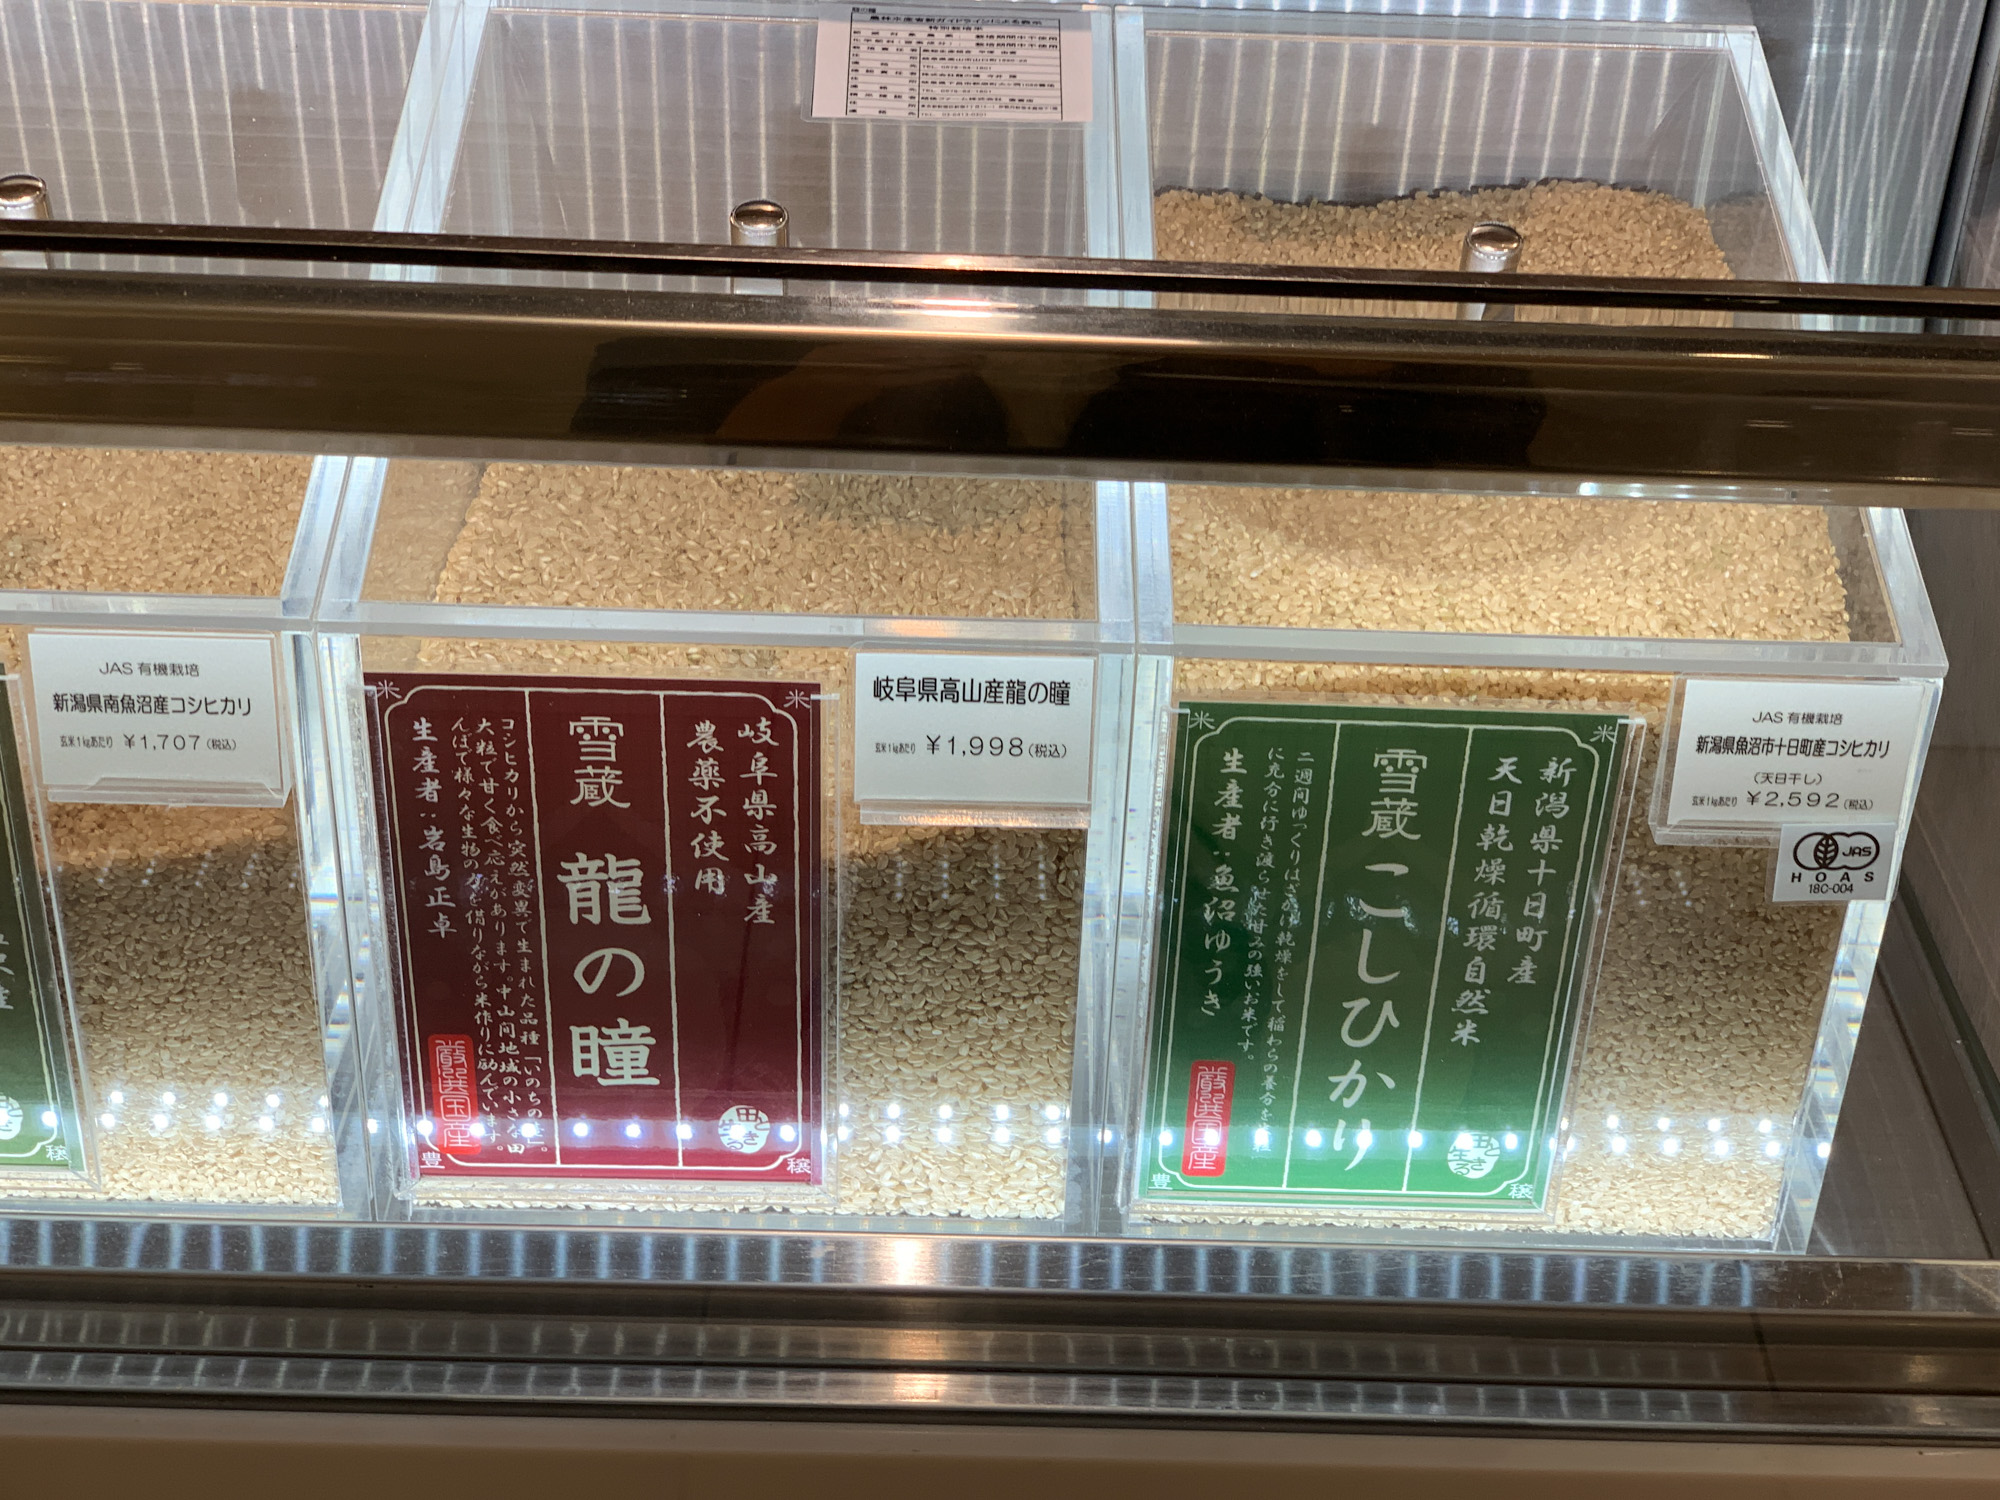 Organic in Tokyo